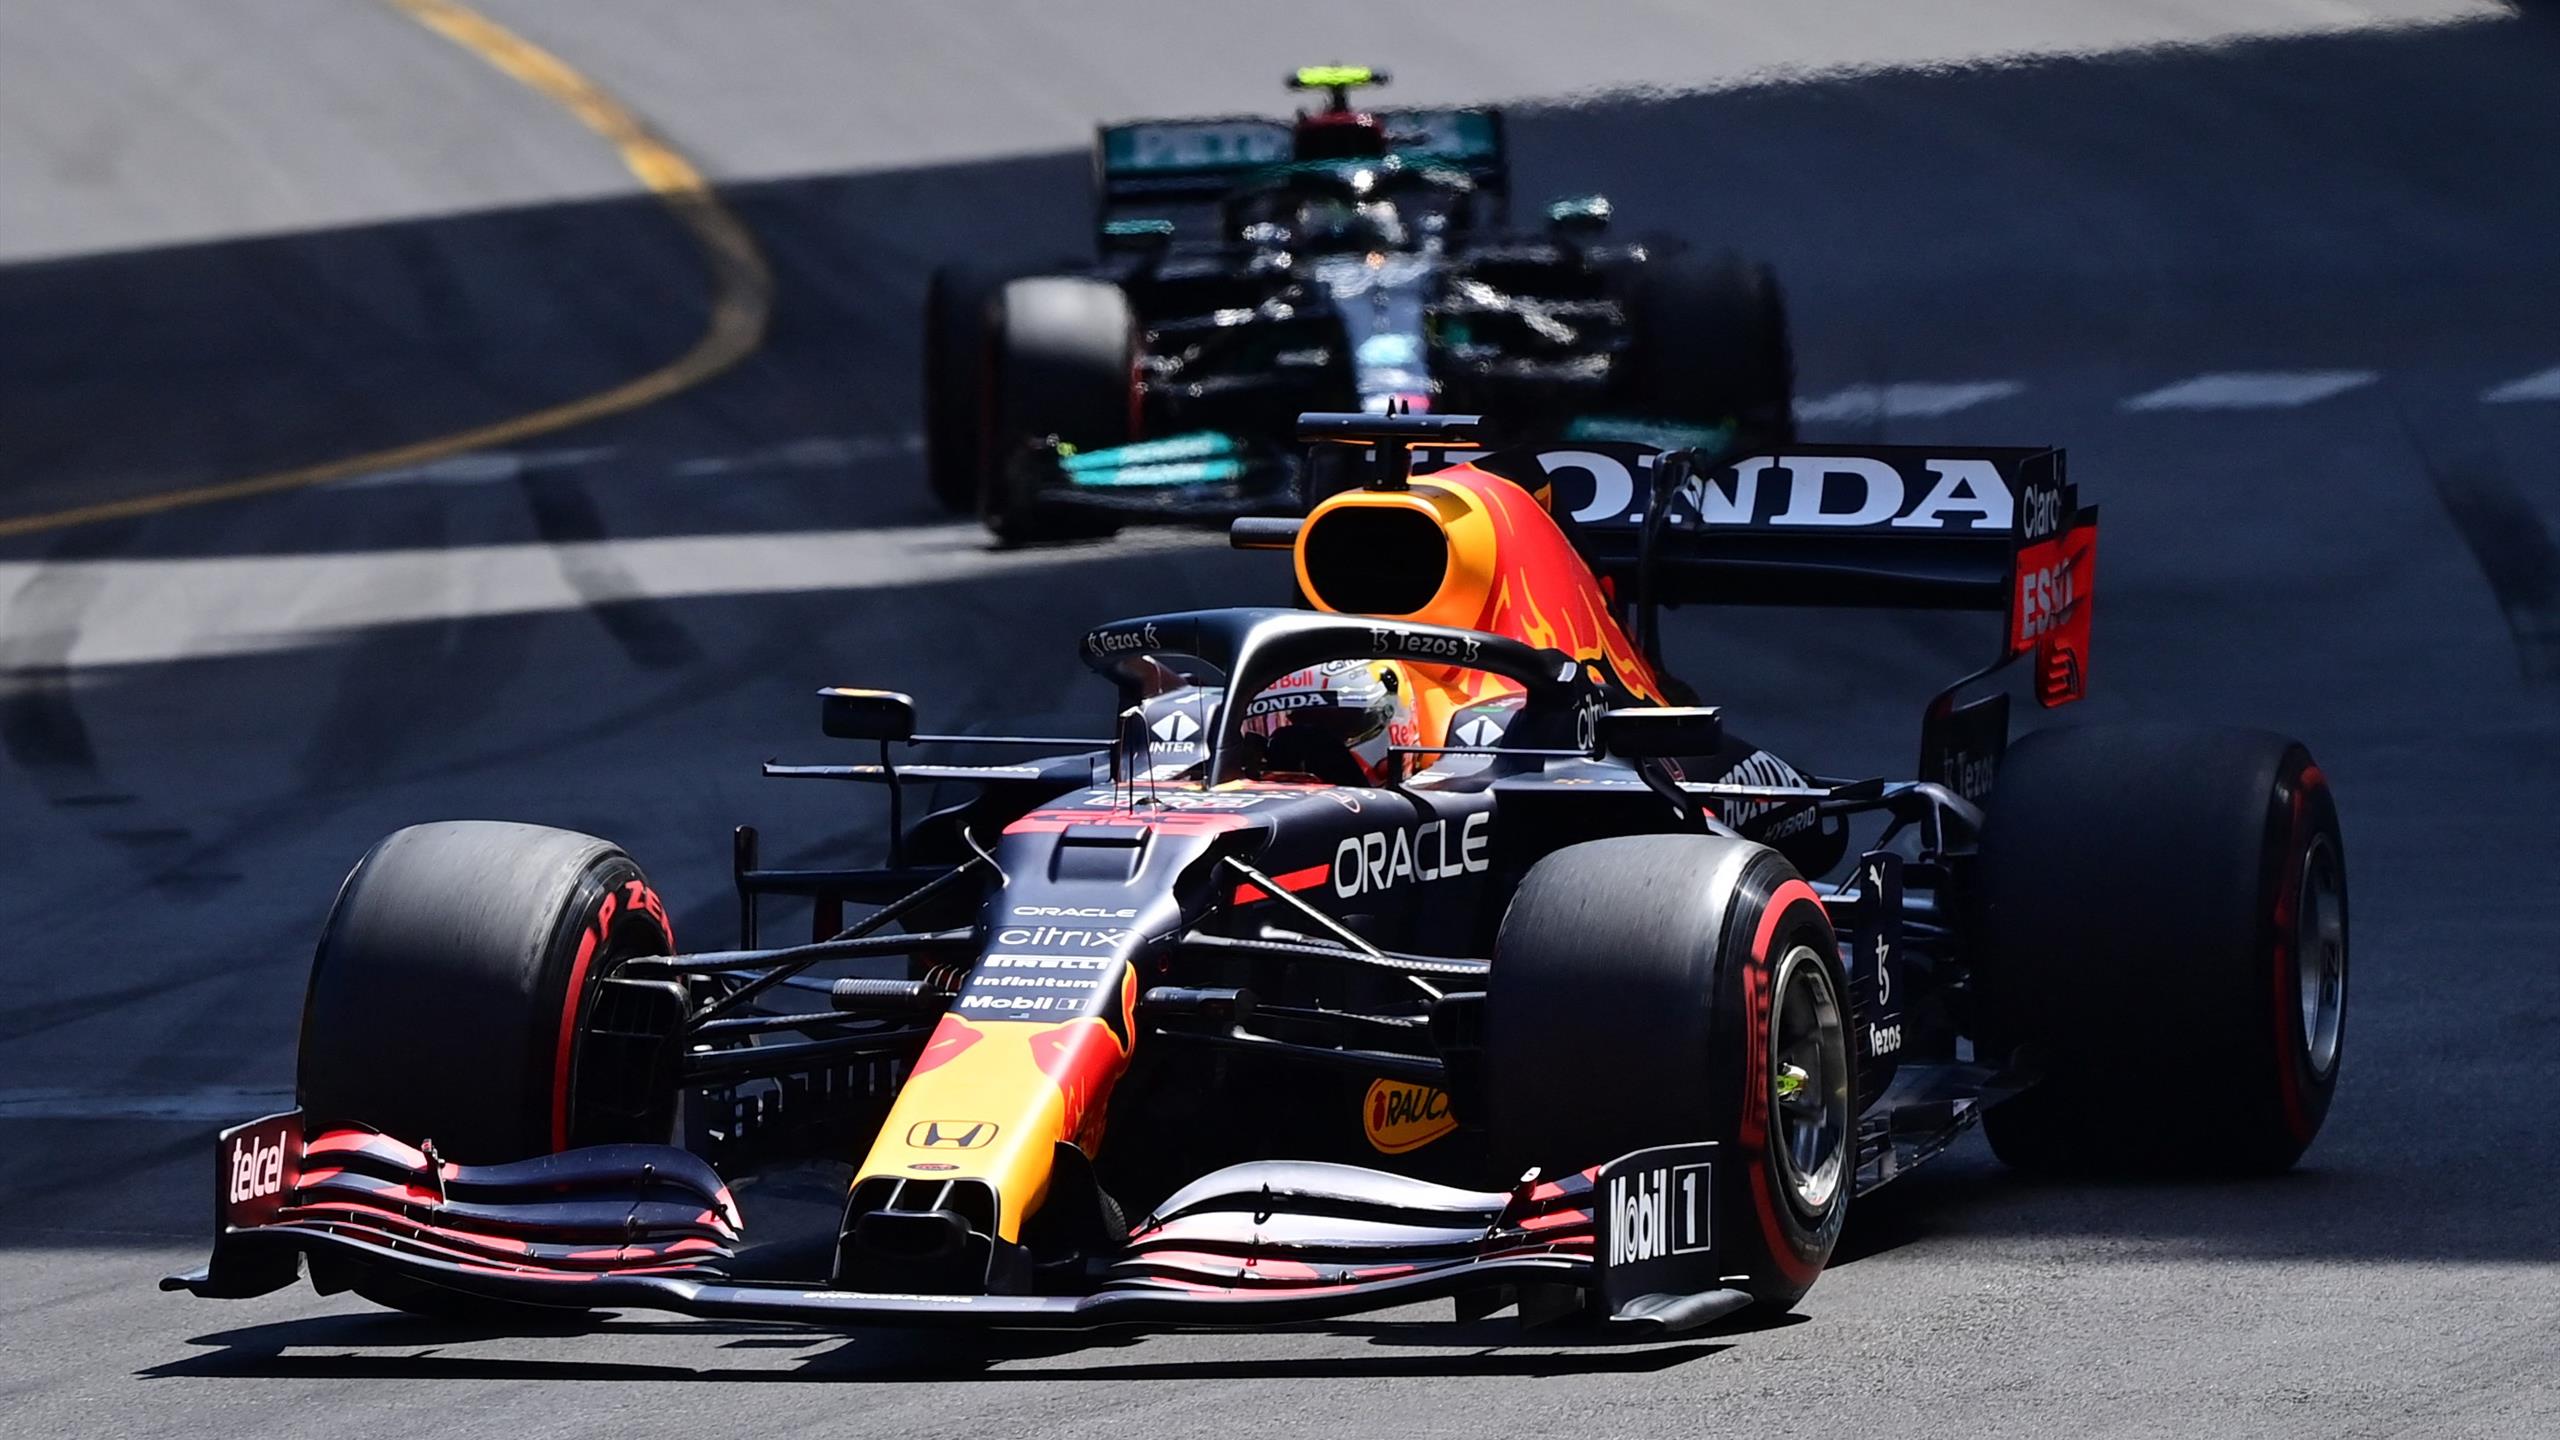 Formula 1 Monaco Grand Prix -Max Verstappen wins to move ahead of Lewis Hamilton